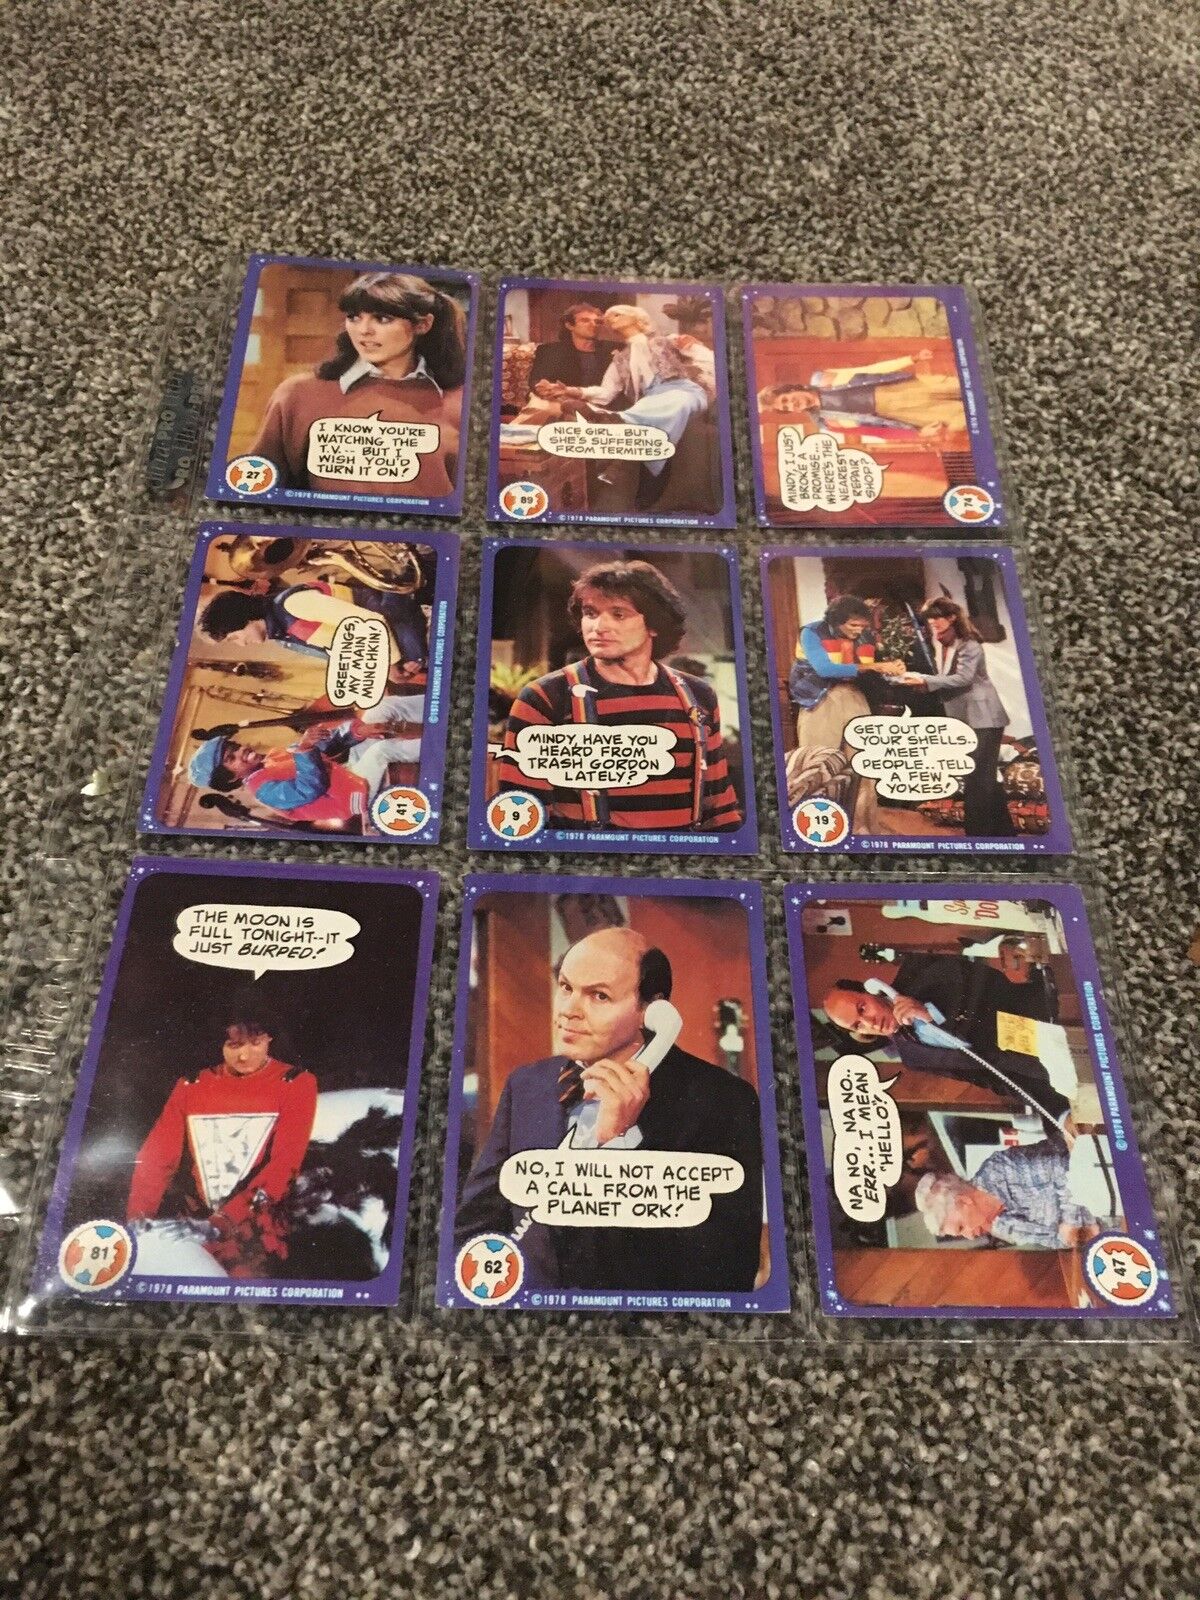 Mork and Mindy TRADING CARDS Rare TV Robin Williams Mindy PAM Dawber Show Retro 